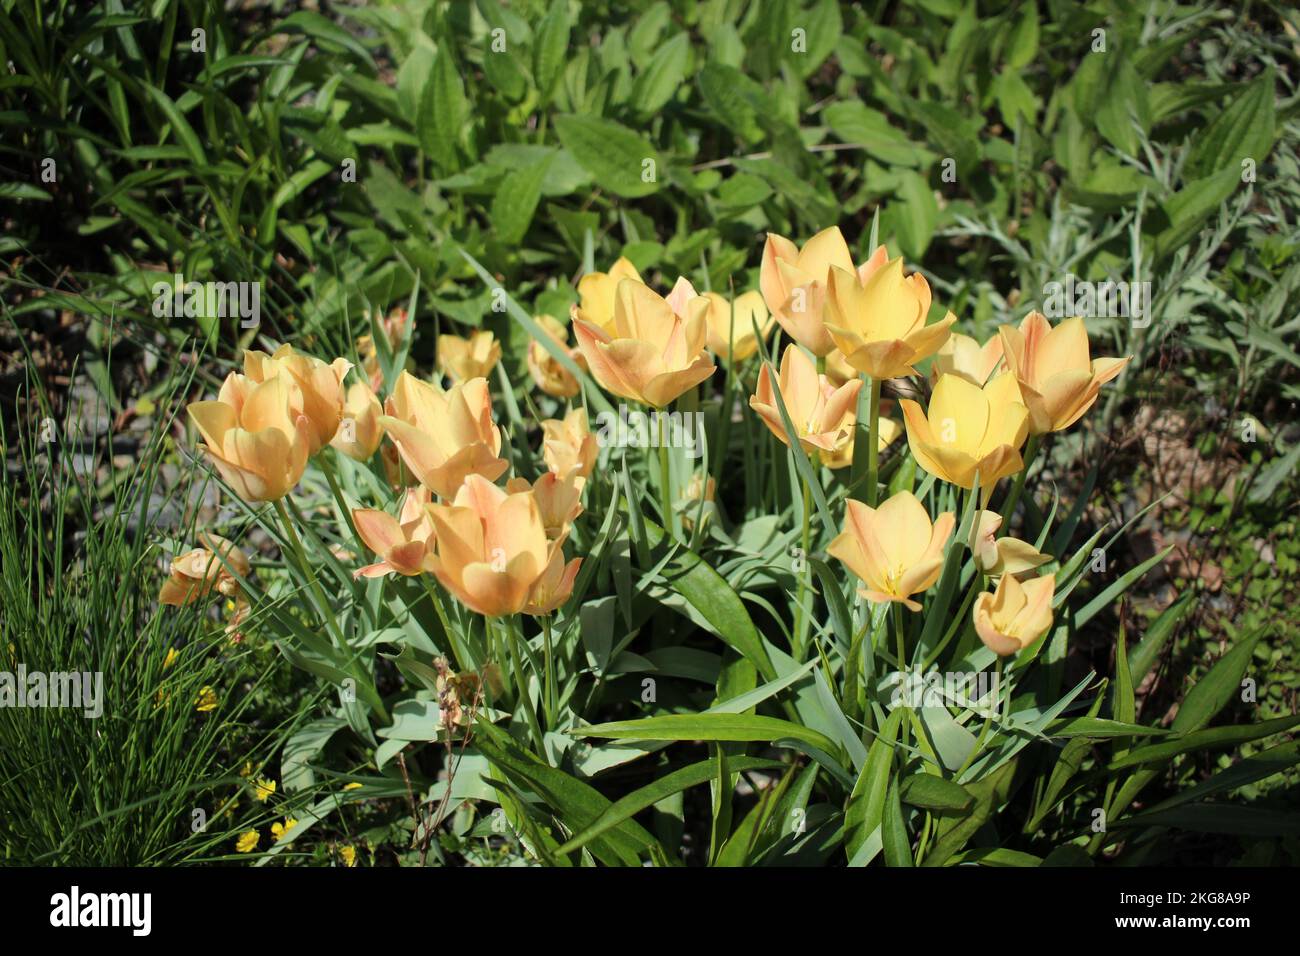 Tulipa batalinii bronze charm hi-res stock photography and images - Alamy